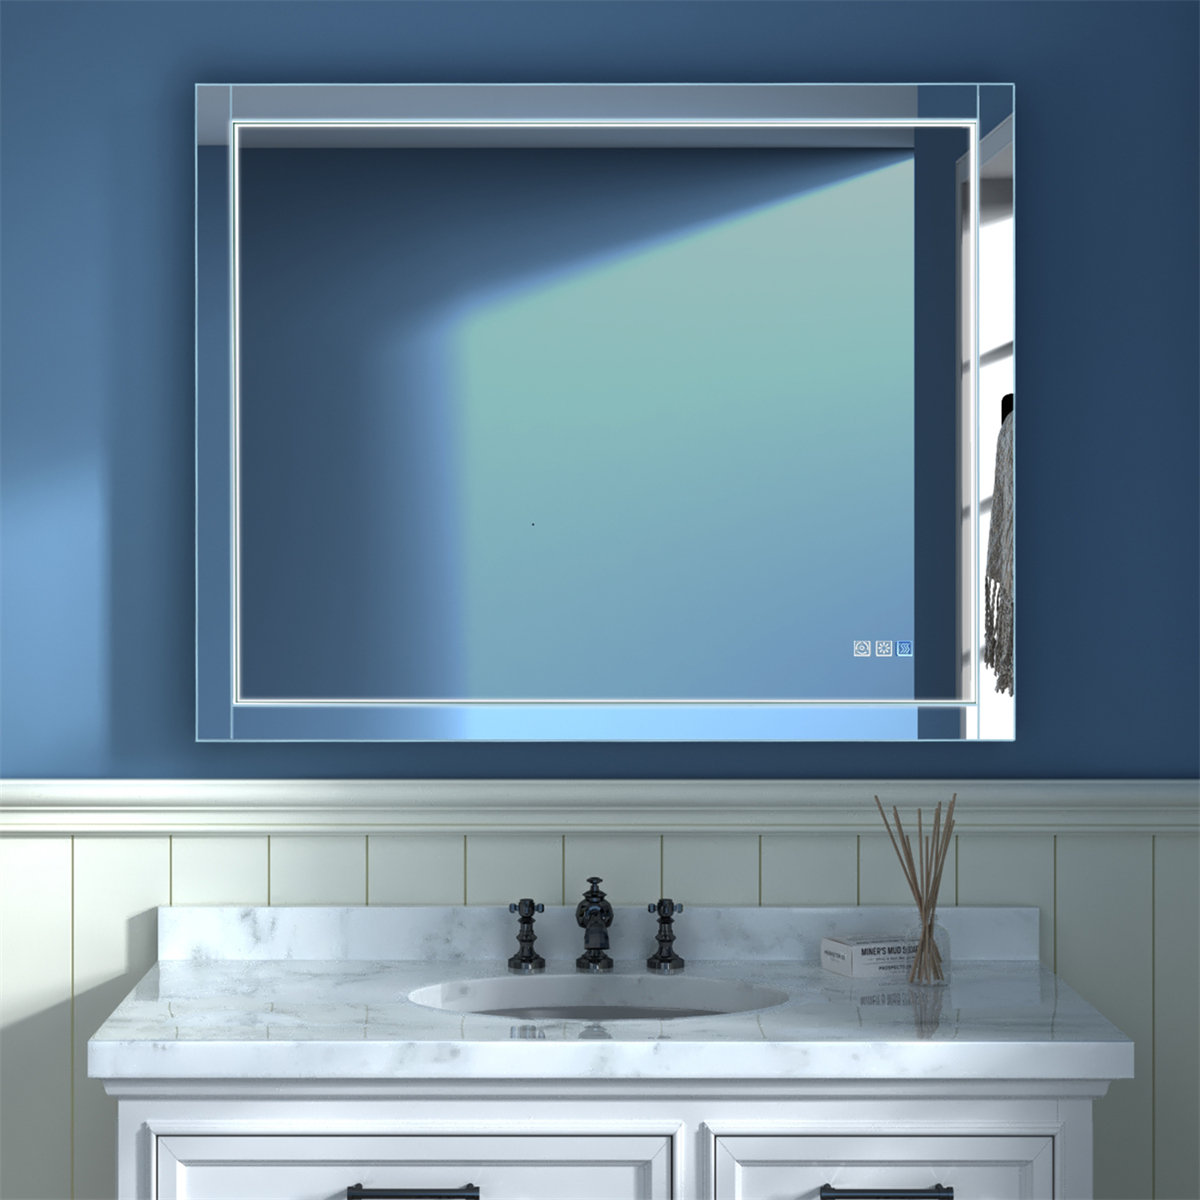 Aevar Super Bright Double LED Lights Anti-Fog Bathroom / Vanity Mirror with Tempered Glass & ETL Orren Ellis Size: 60 x 36